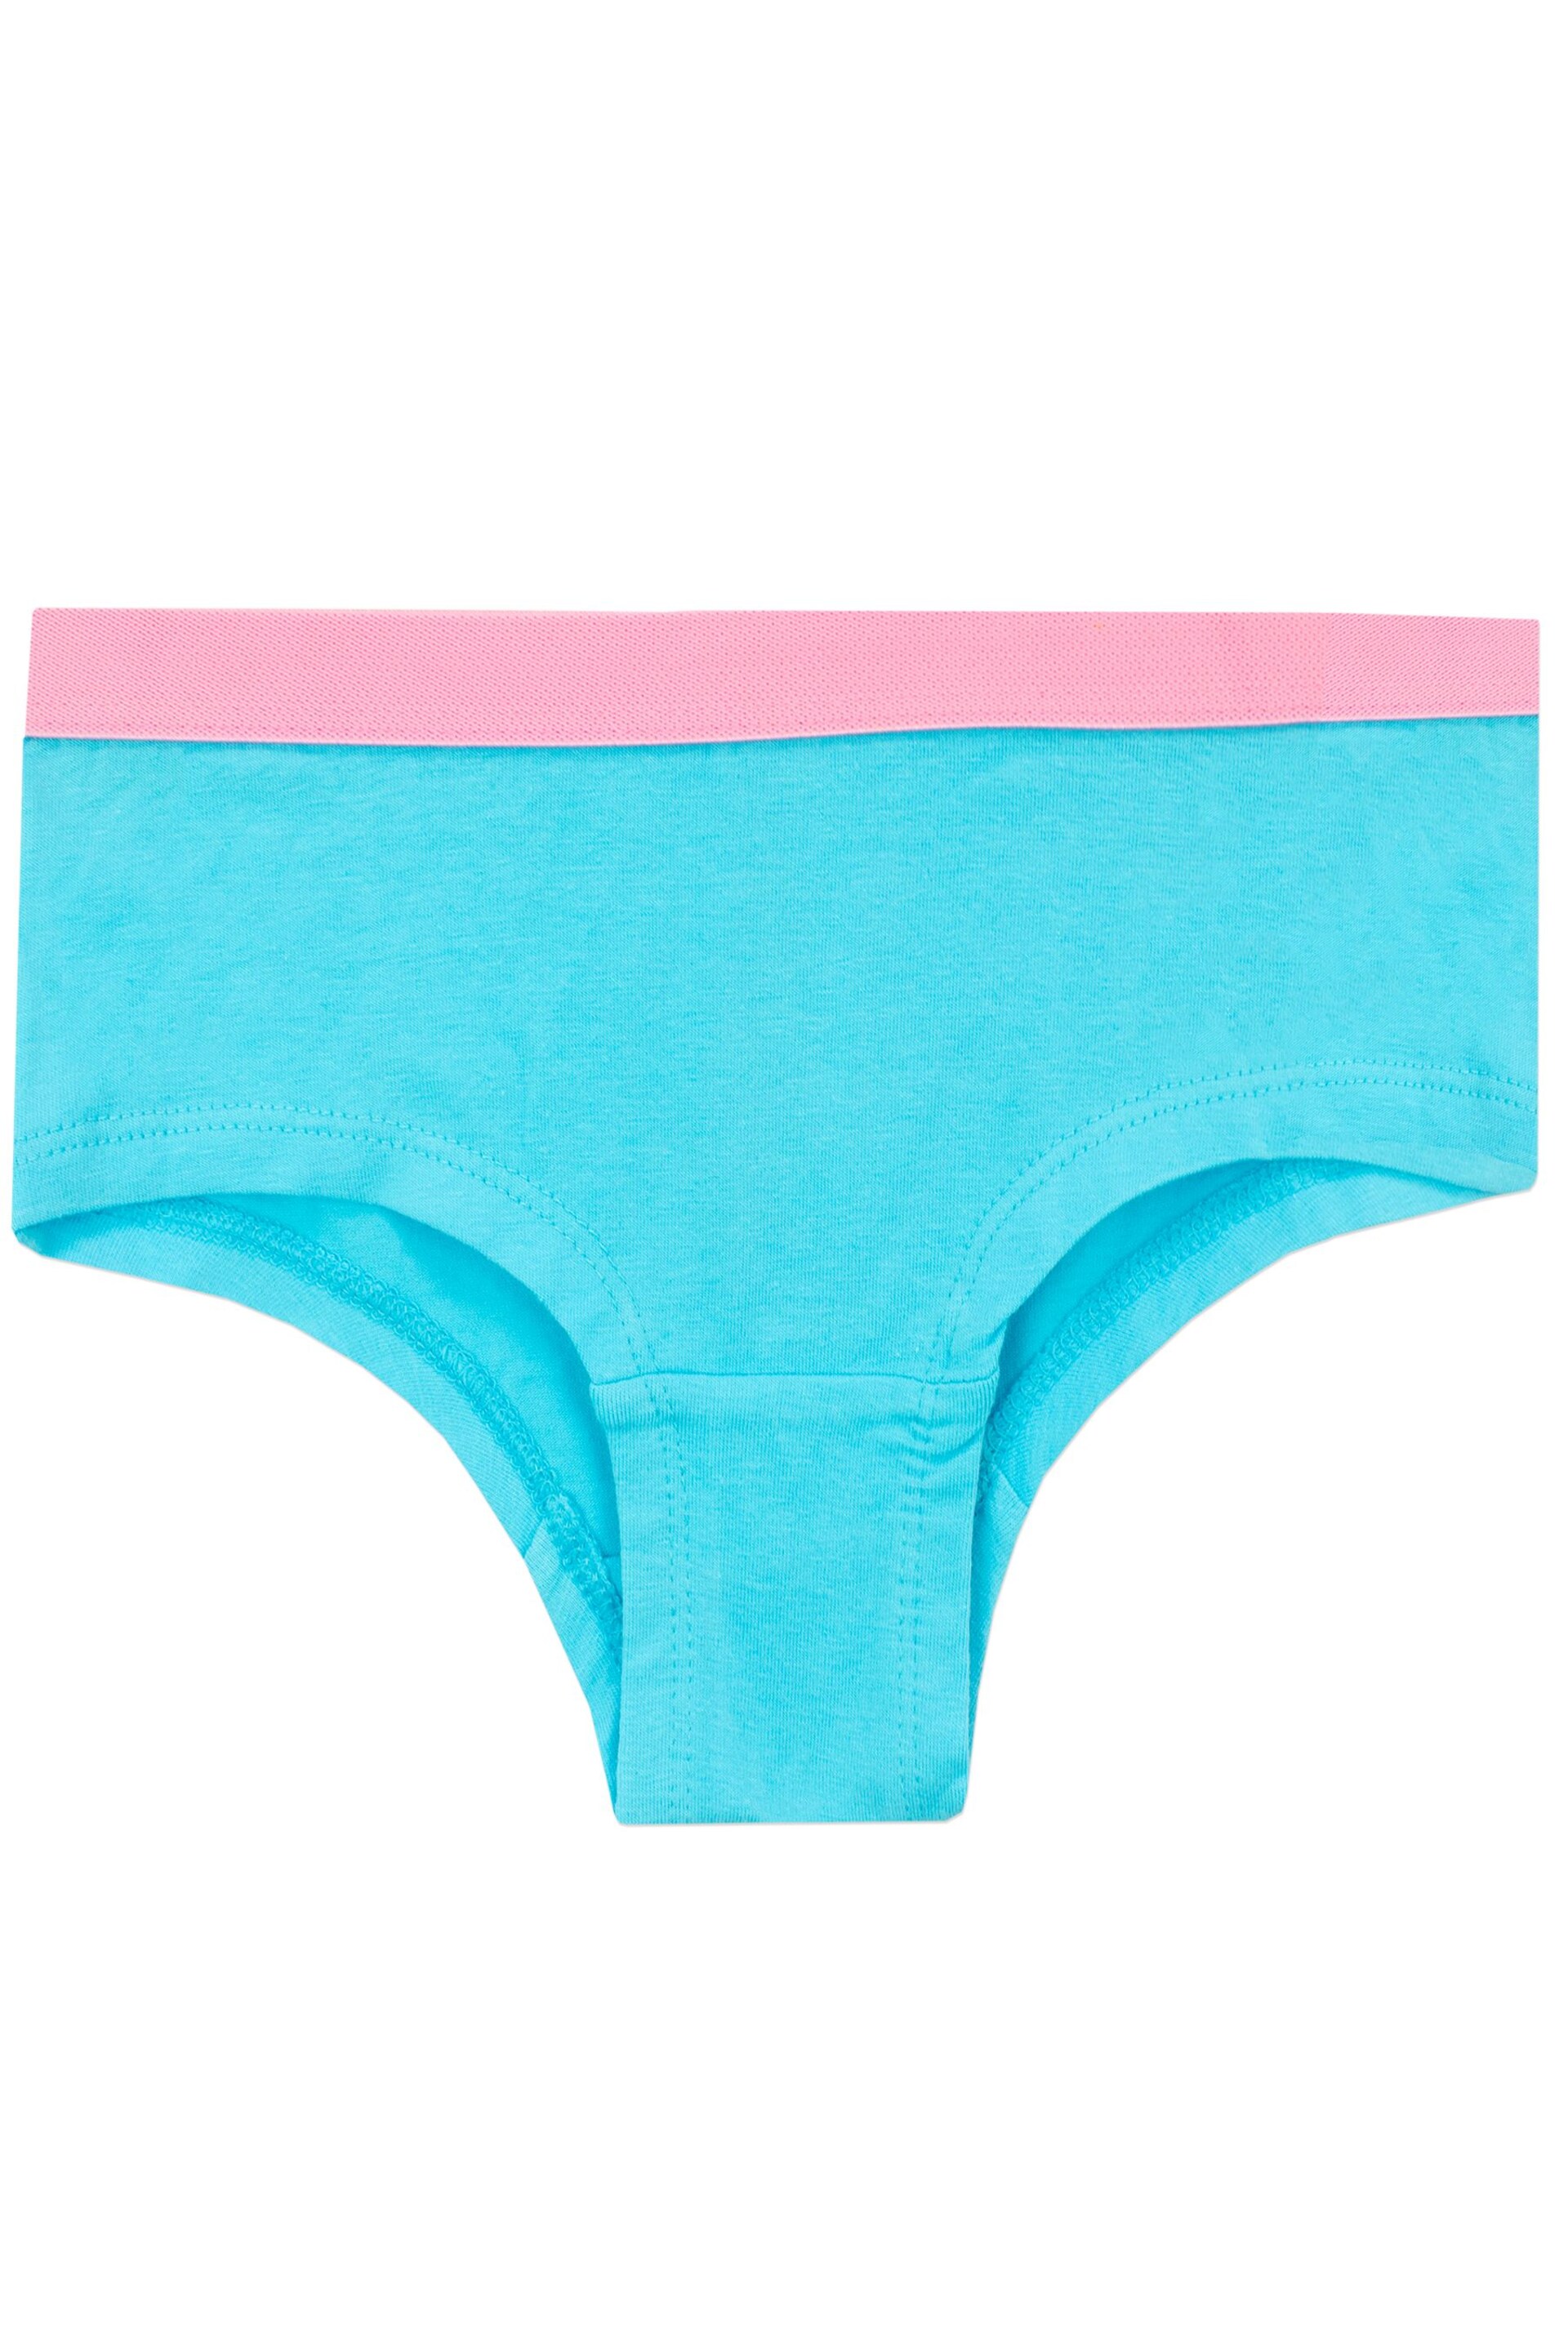 Harry Bear Multi Girls Unicorn Underwear 5 Packs - Image 5 of 5